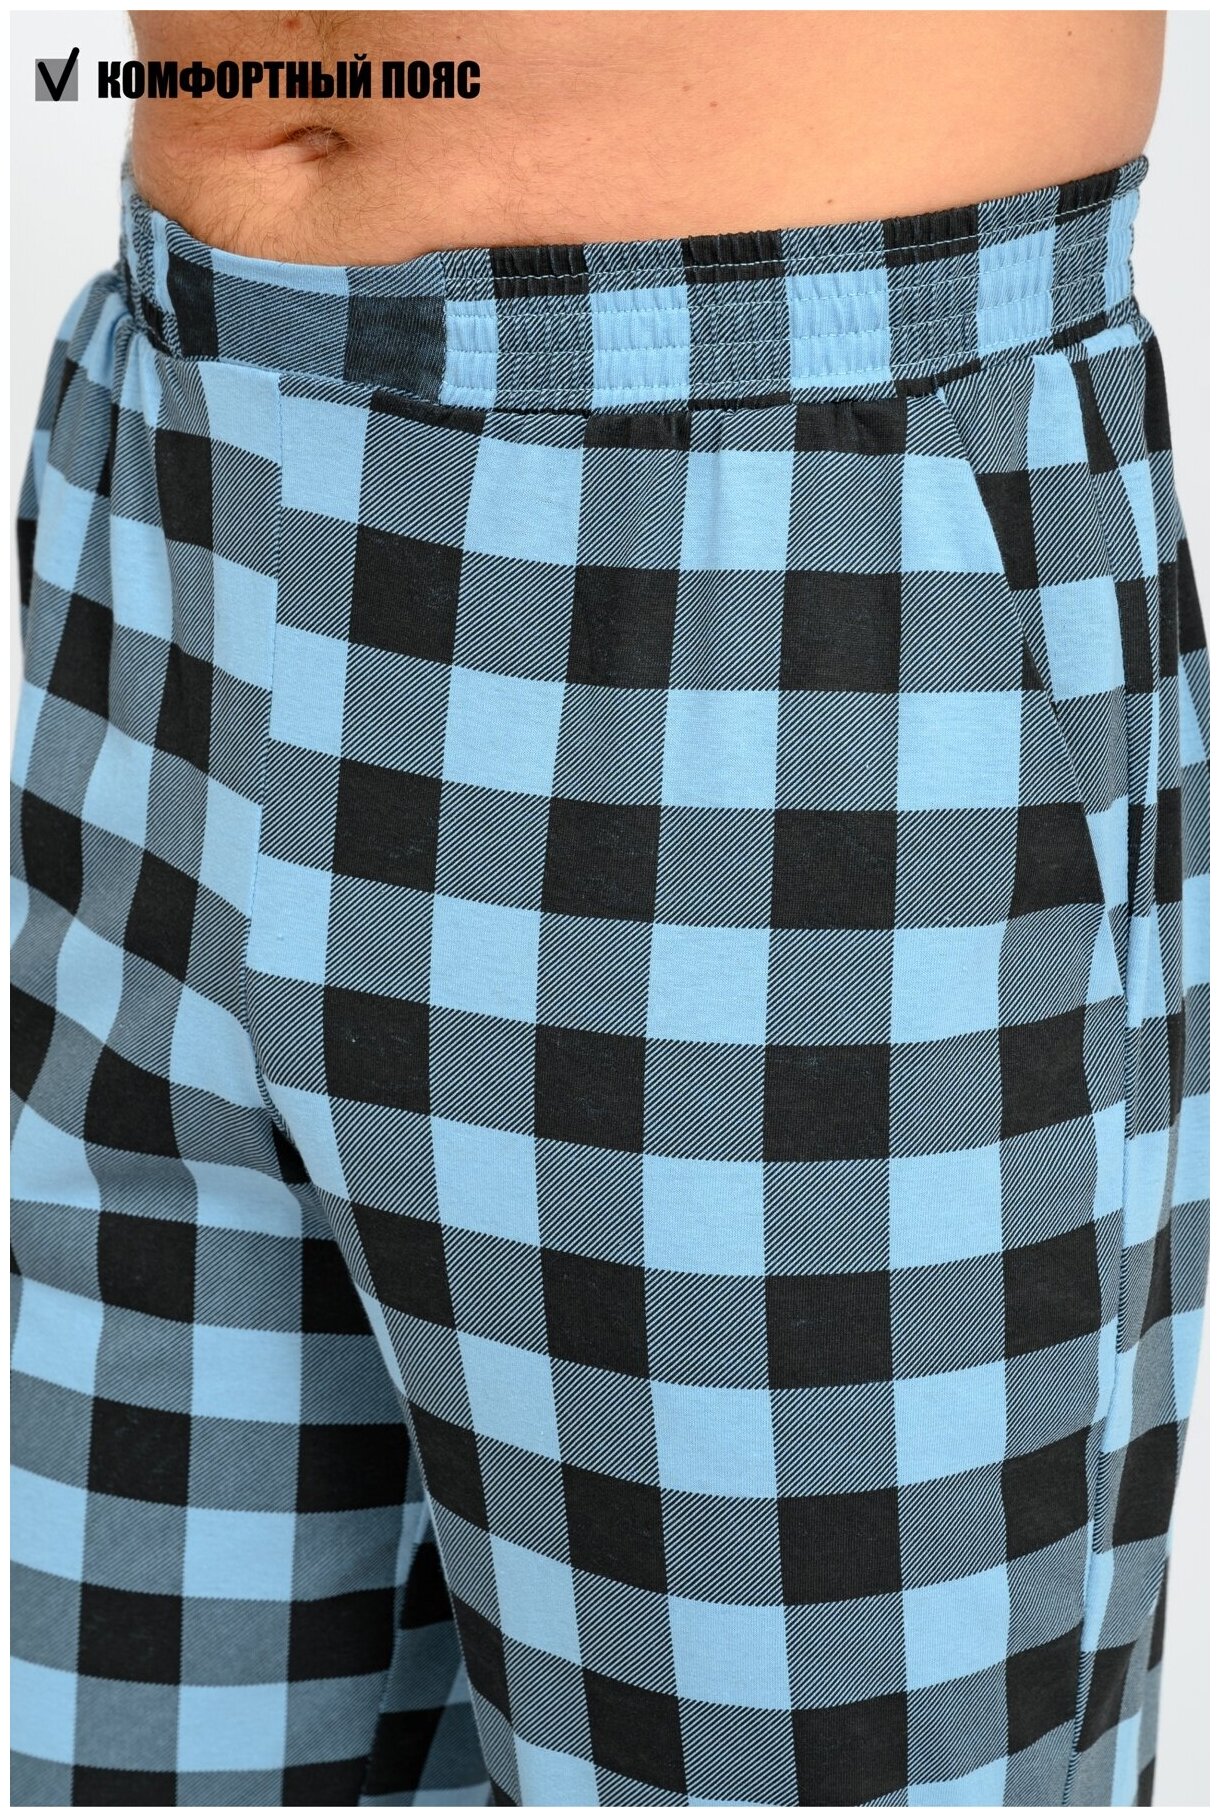 Пижама Ш'аrliзе, брюки, трикотажная, размер 56, голубой - фотография № 4